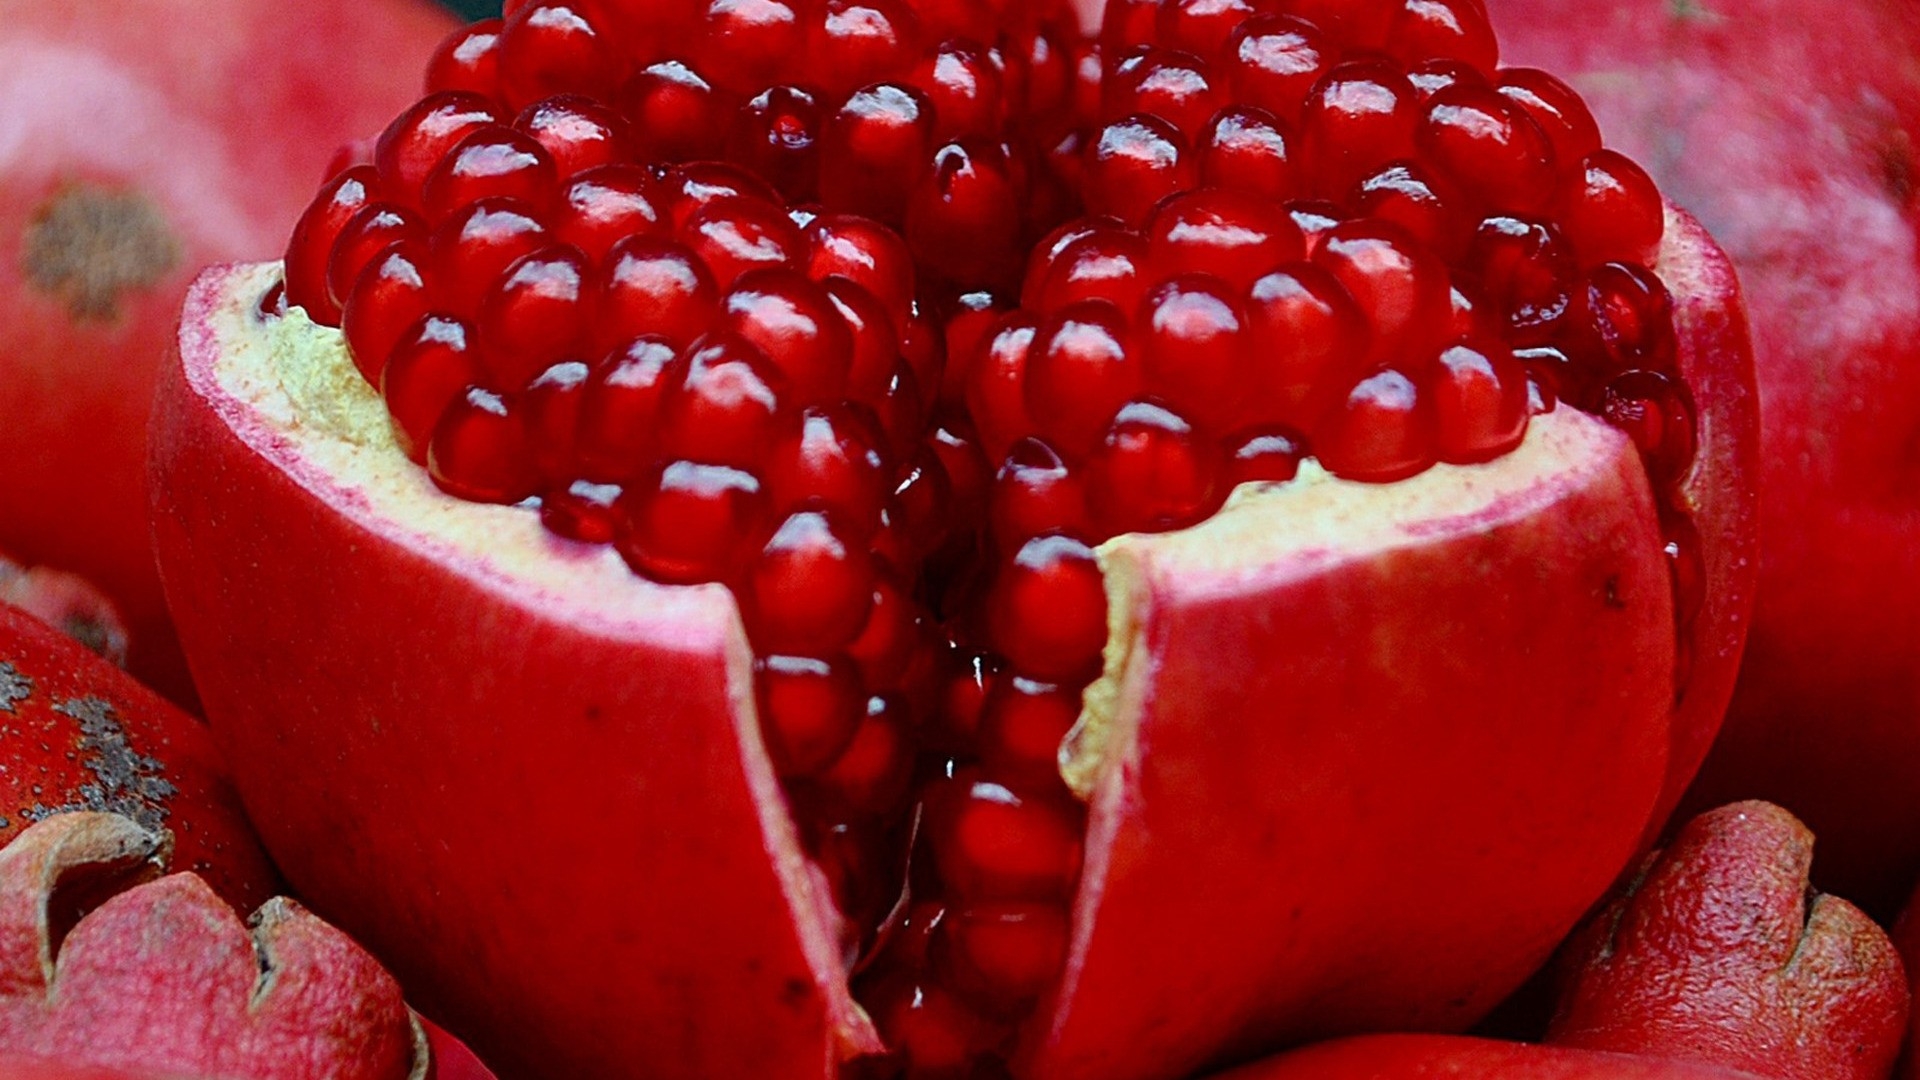 A pomegranate broken into pieces